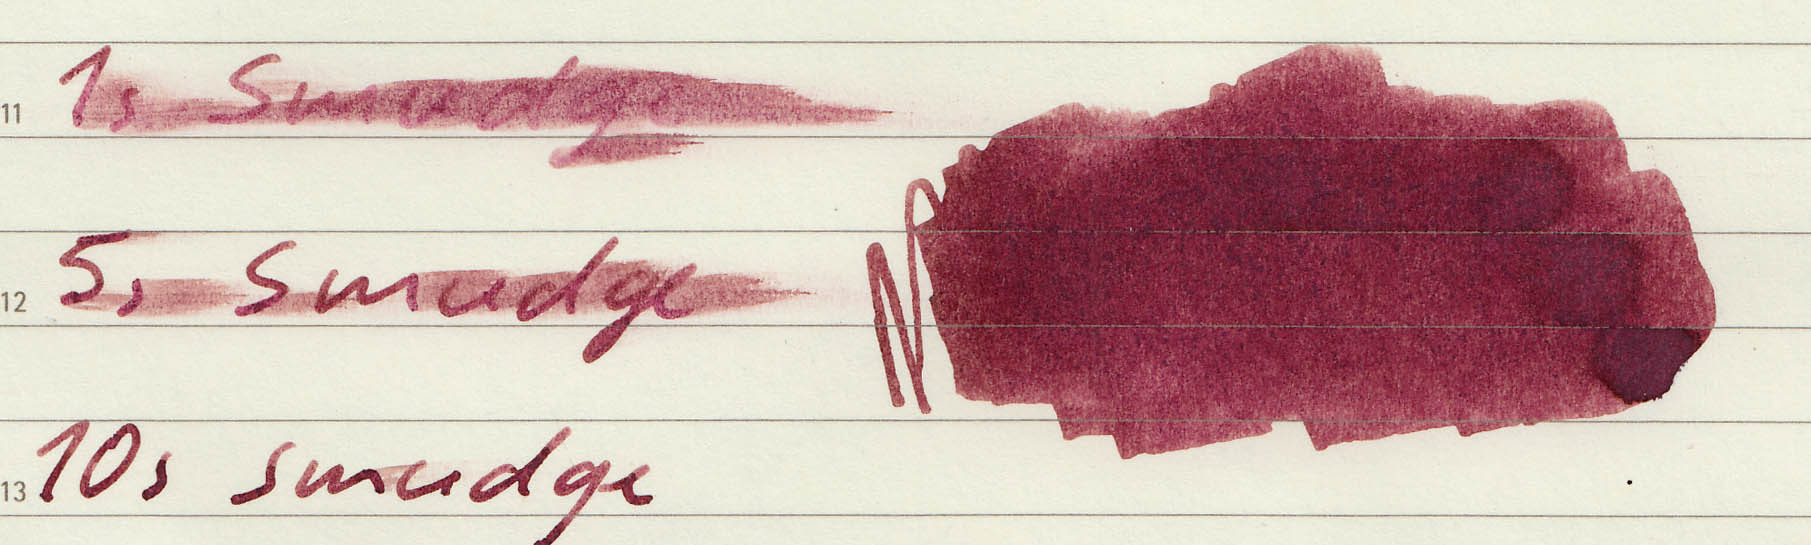 Gourmet Pens: Louis Vuitton Rouge Libertin Ink